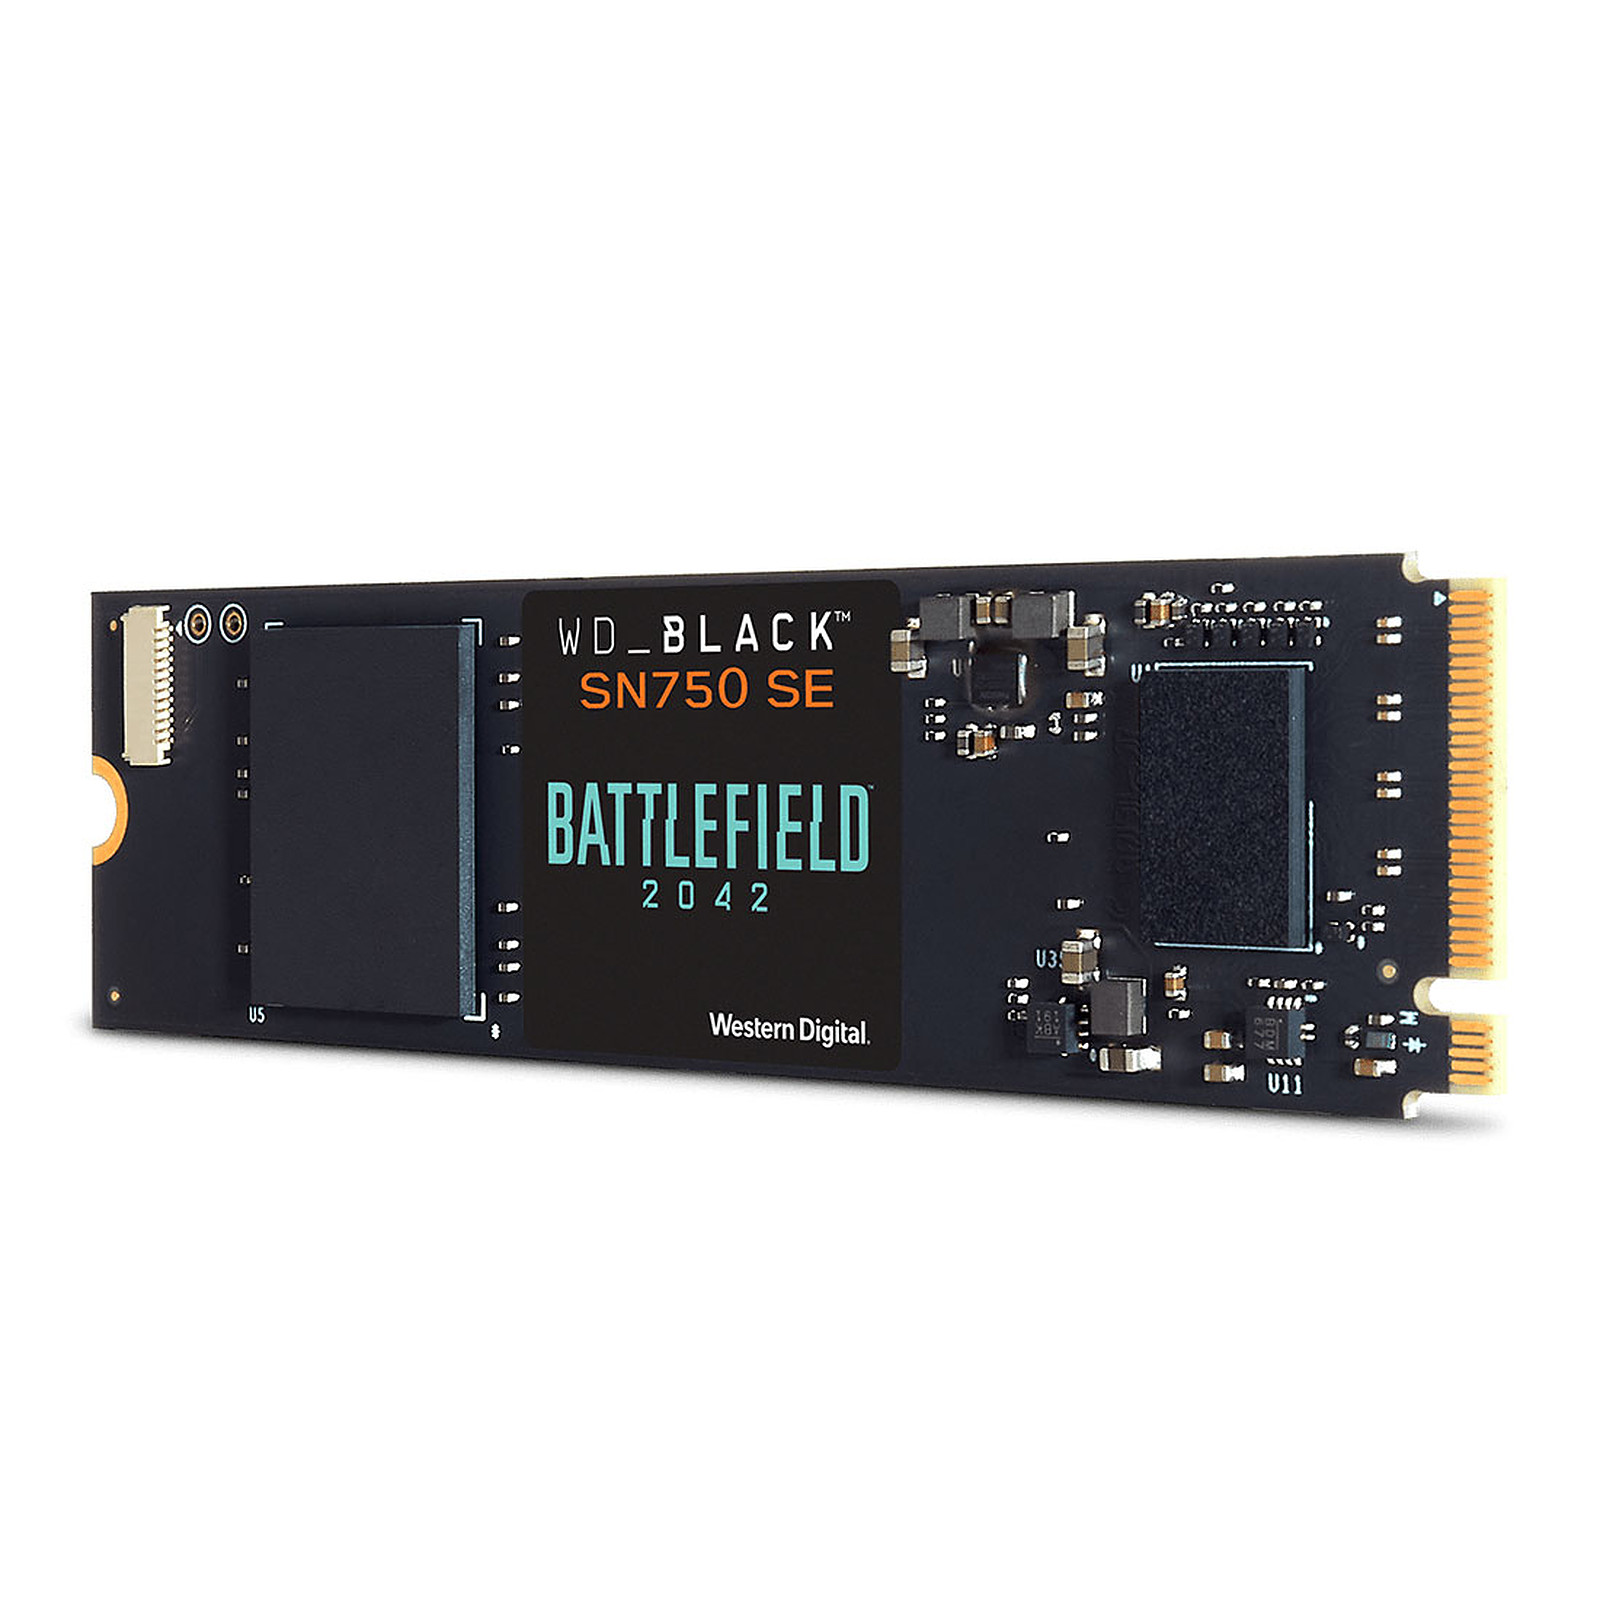 Western Digital SSD WD Black SN750 SE 500 Go Battlefield 2042 - Disque SSD WD_Black